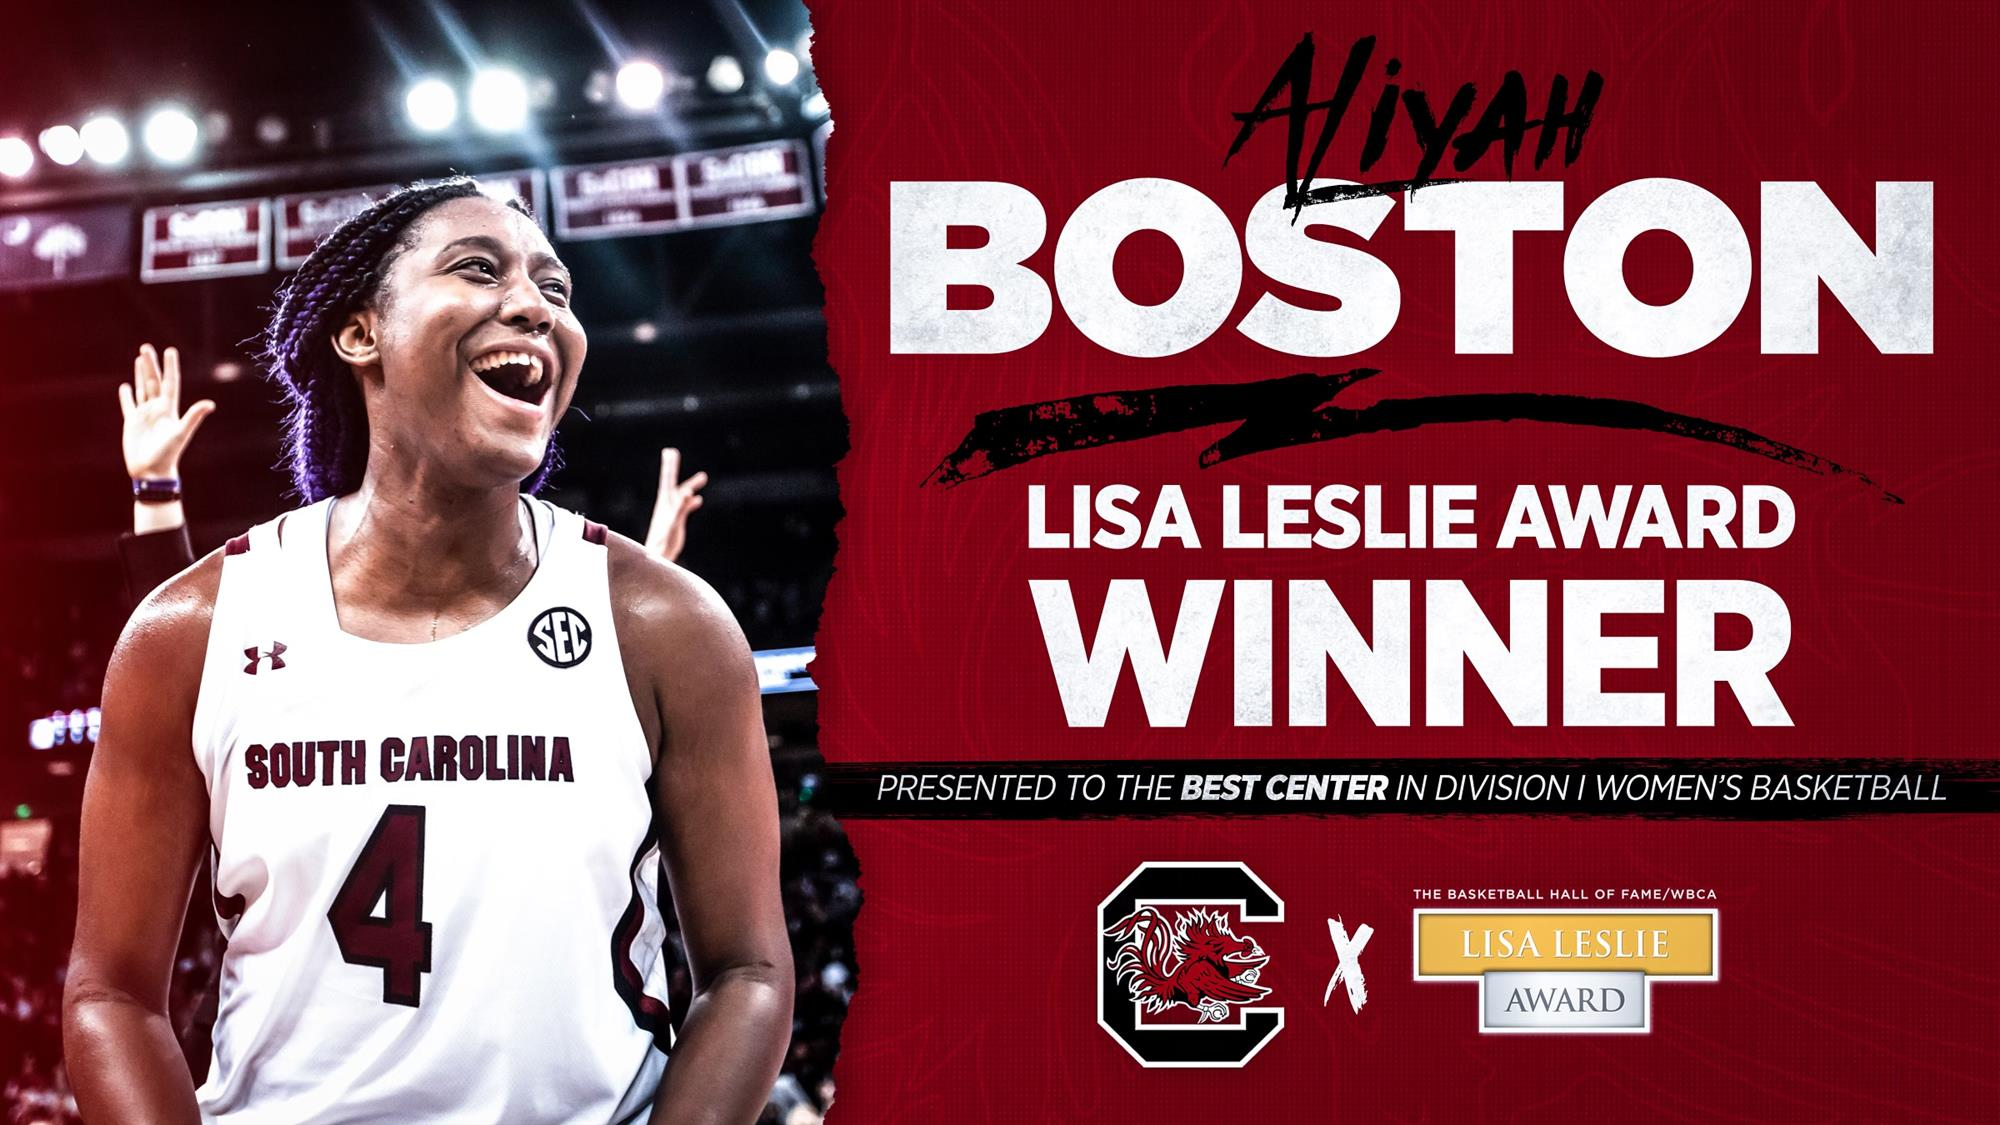 Boston Repeats as Lisa Leslie Award Winner